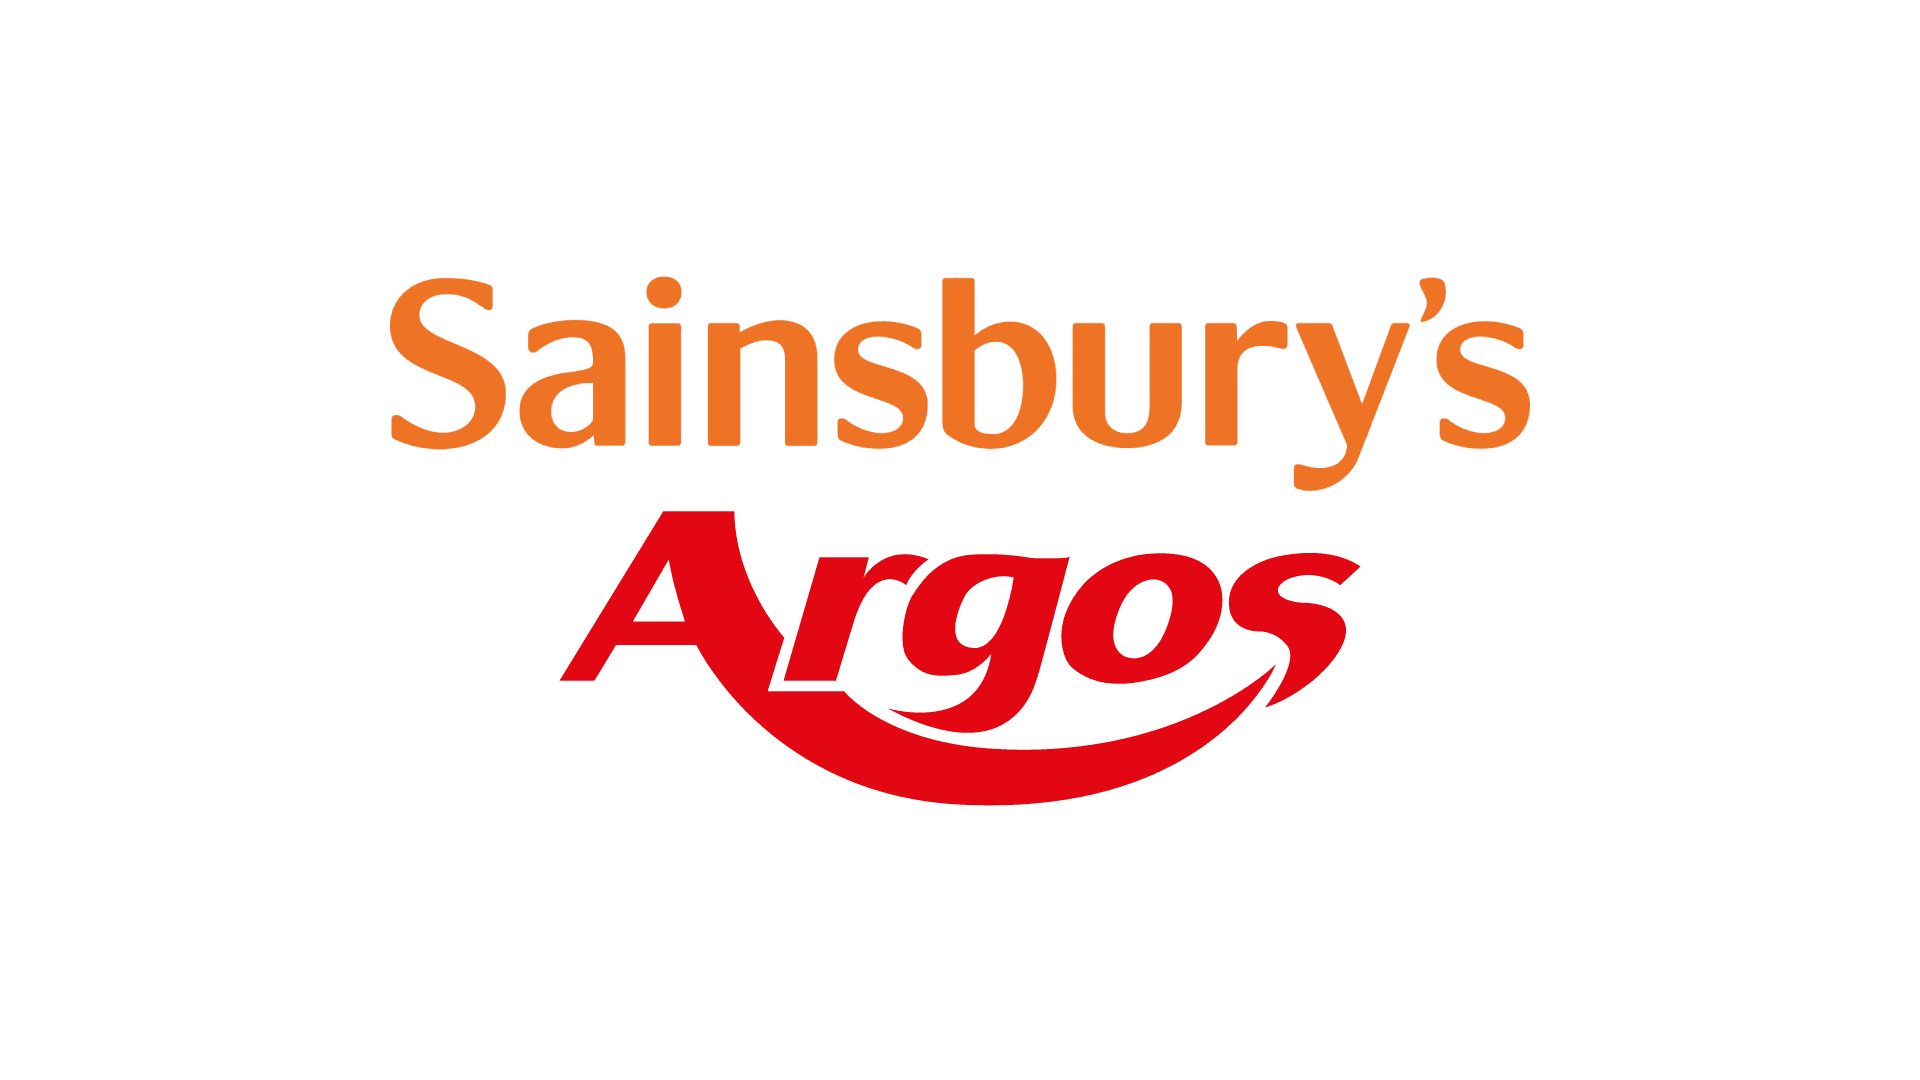 Sainsbury's Argos works with CADS